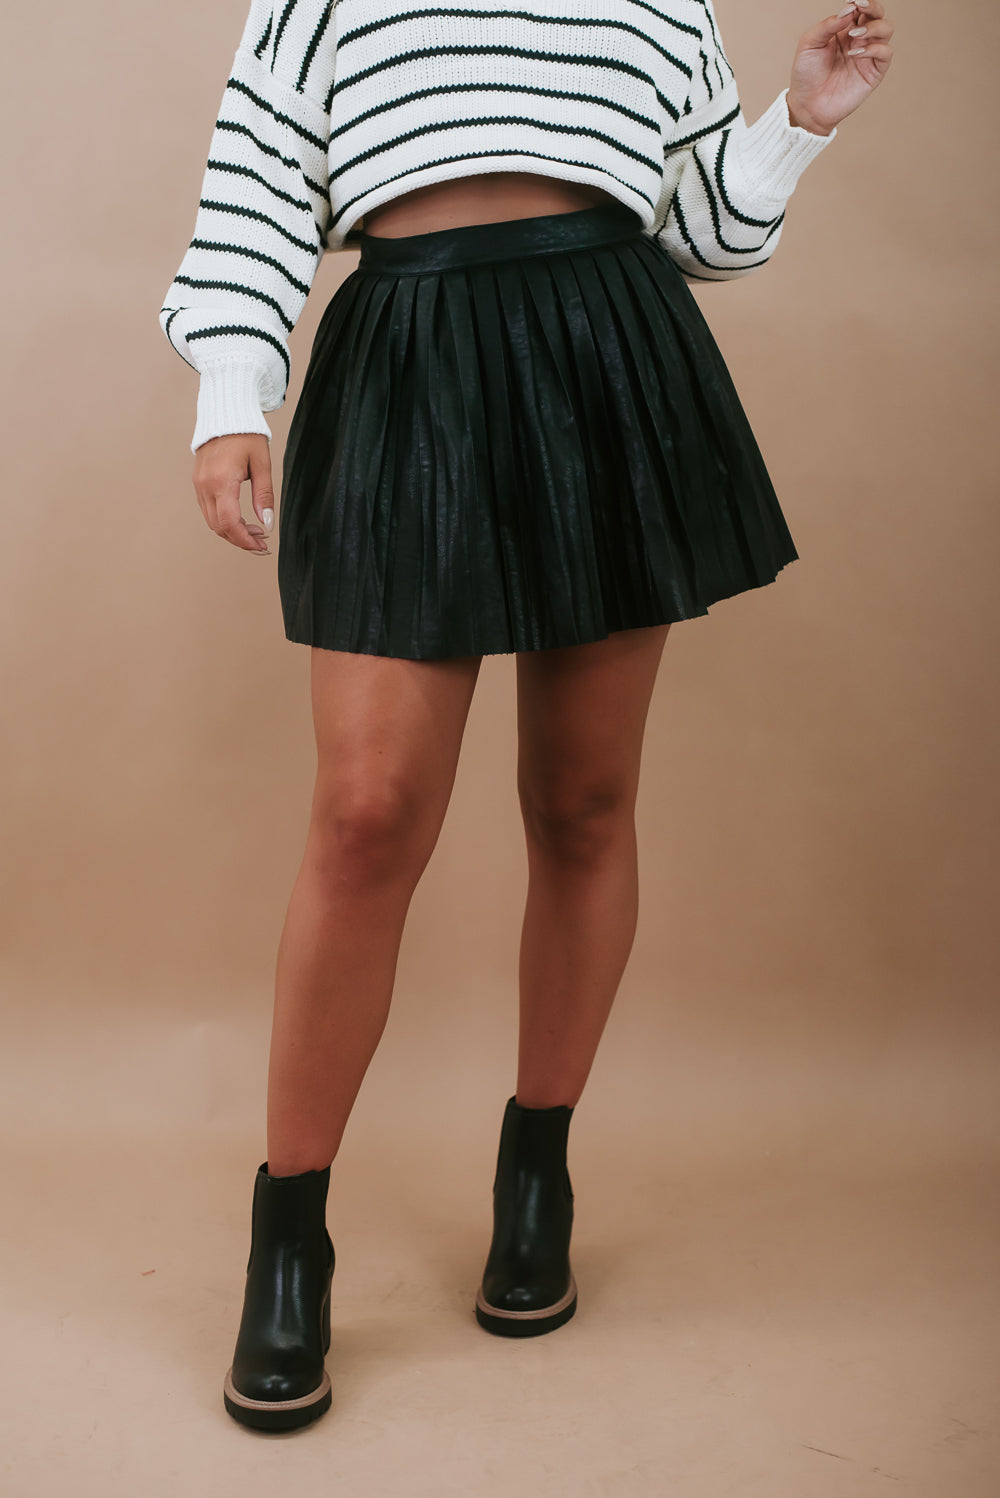 Beautiful LV Brand Women's Pleated High Waisted Skirt - Brown Medium